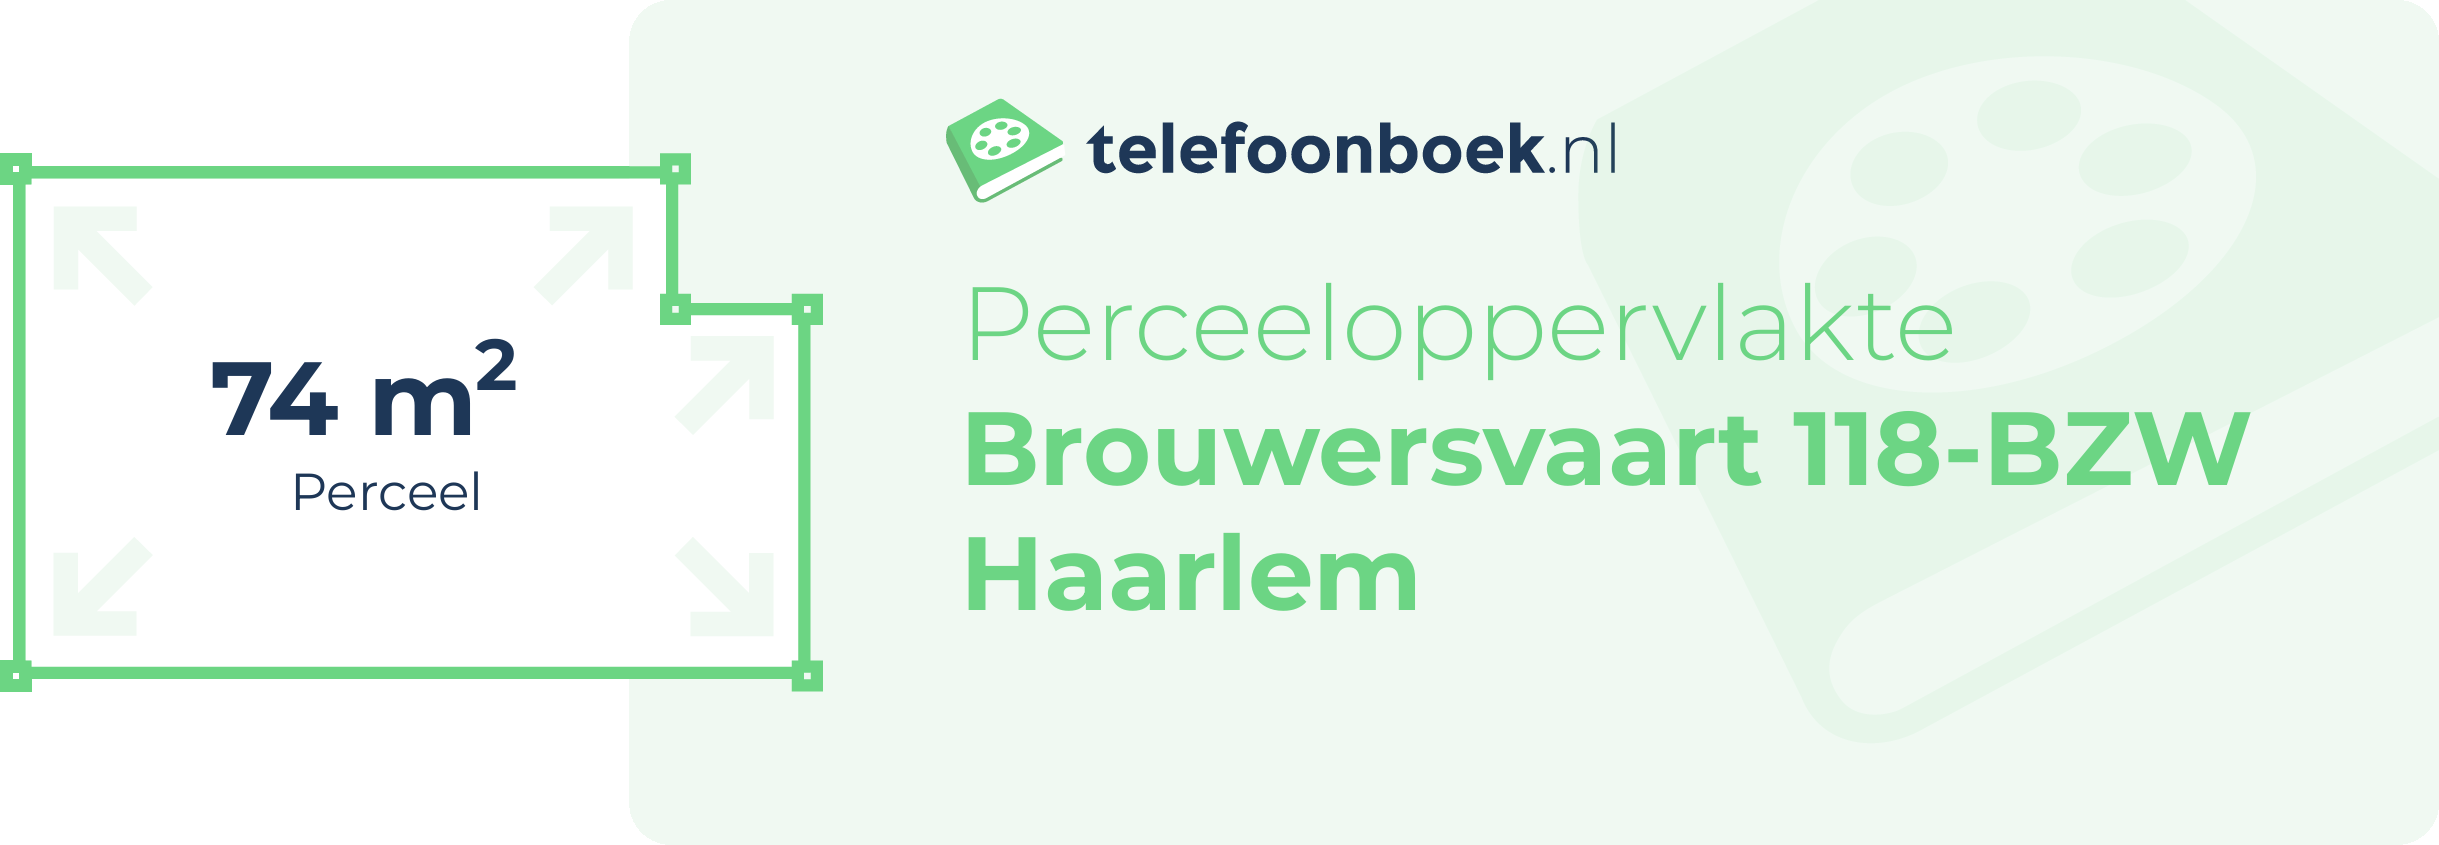 Perceeloppervlakte Brouwersvaart 118-BZW Haarlem